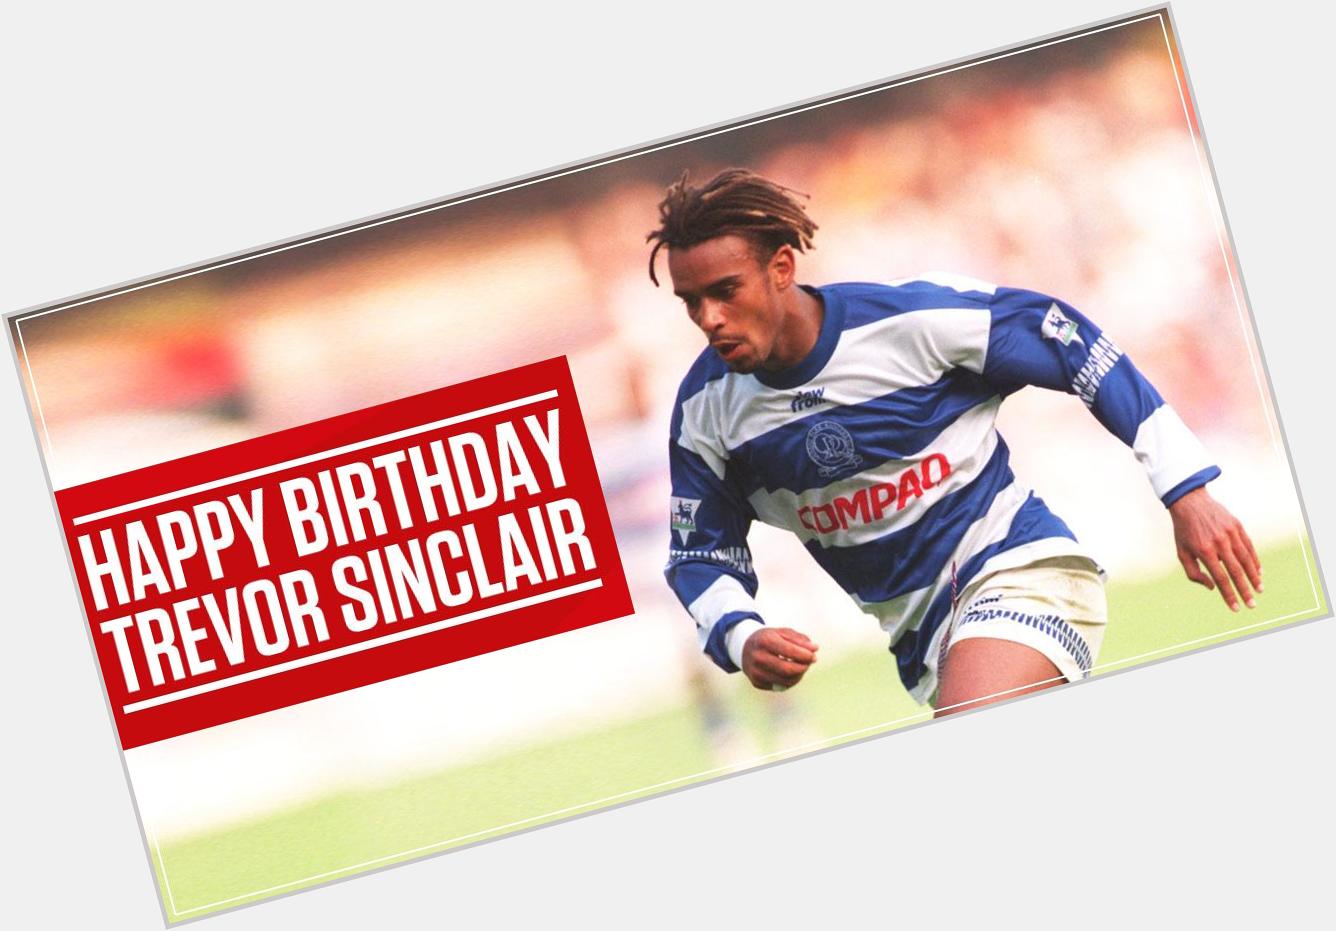 That overhead kick, that hair, Happy Birthday Trevor Sinclair... 